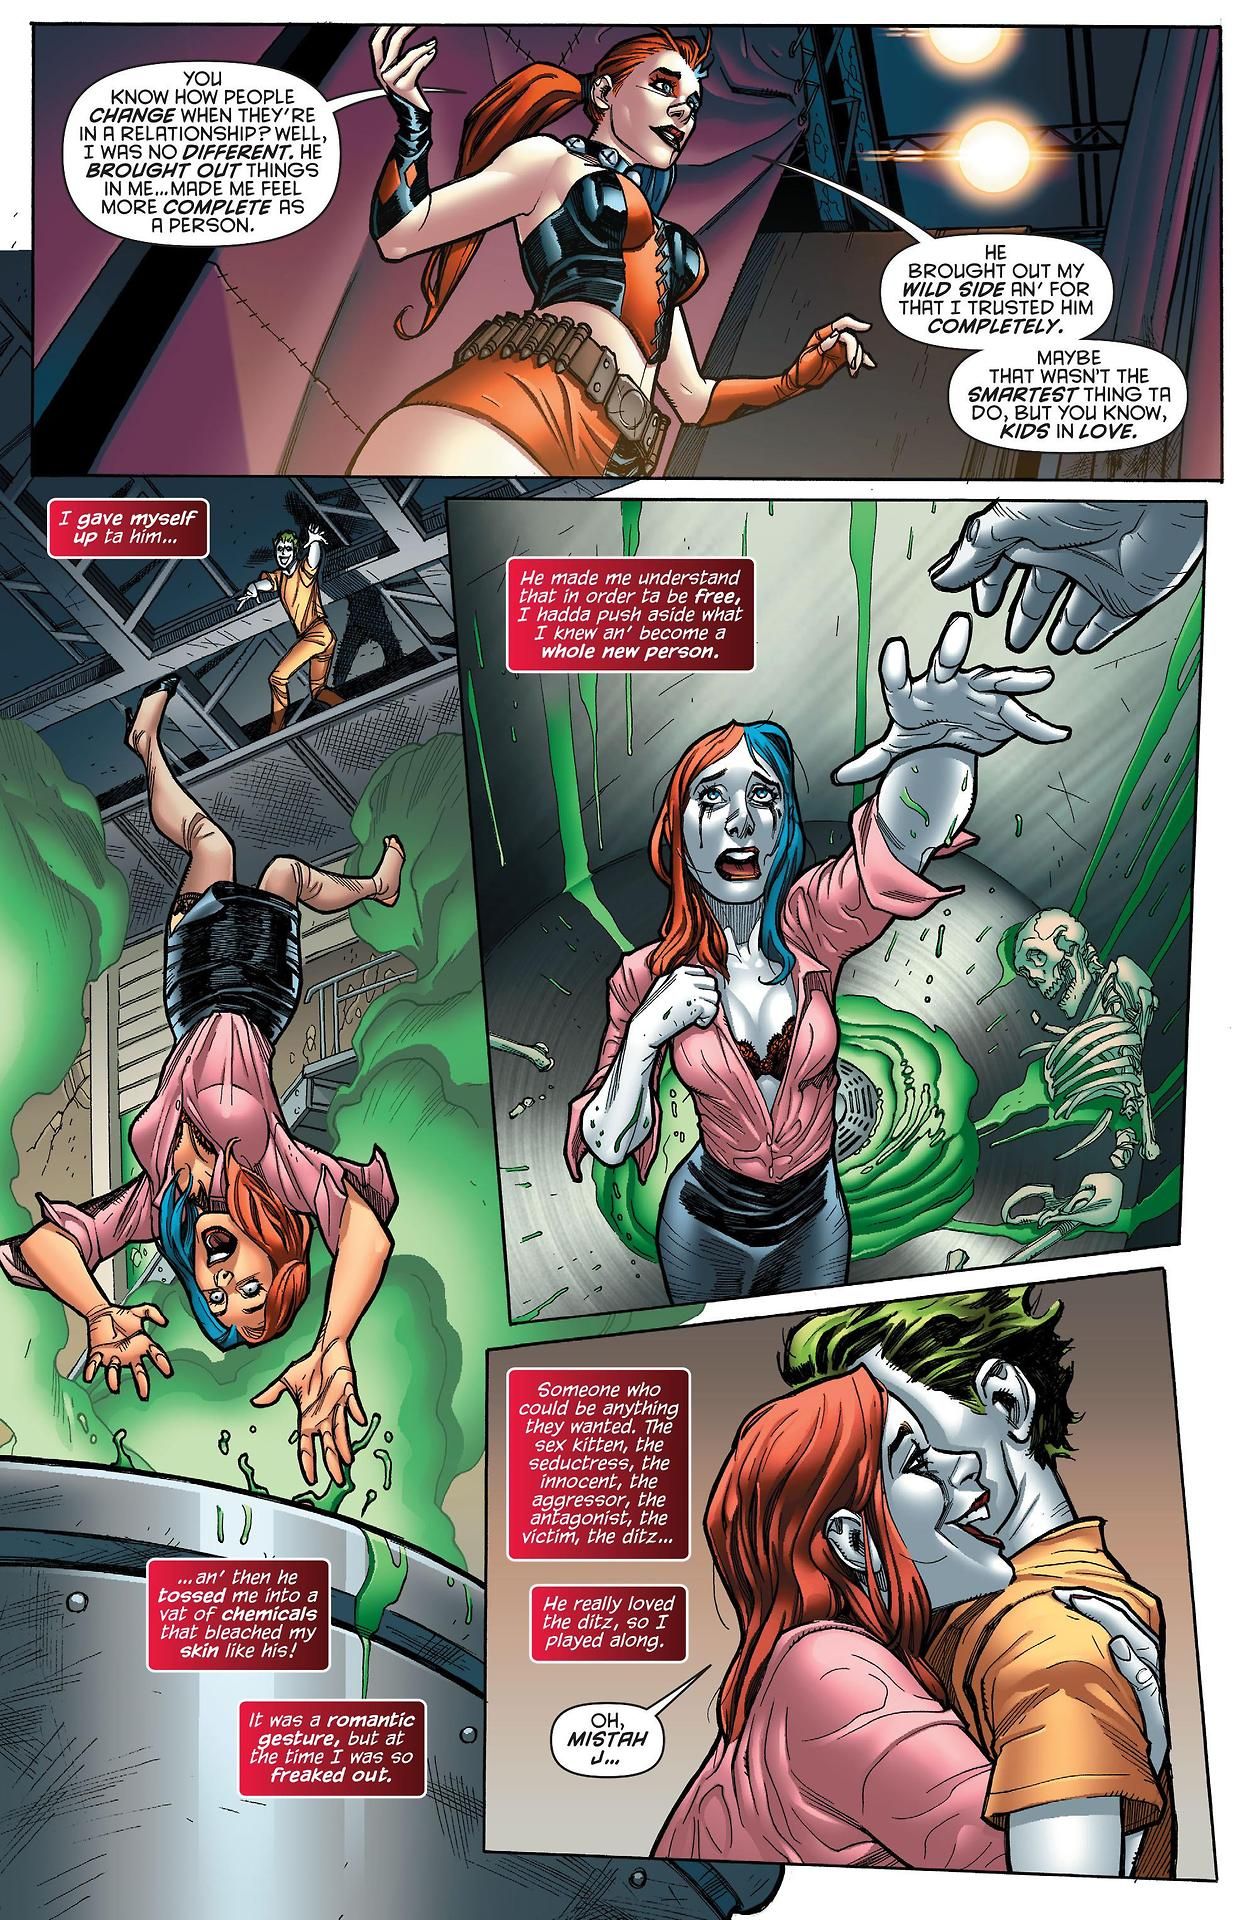 blake webster recommends Harley Quinn And Joker Sex Comic